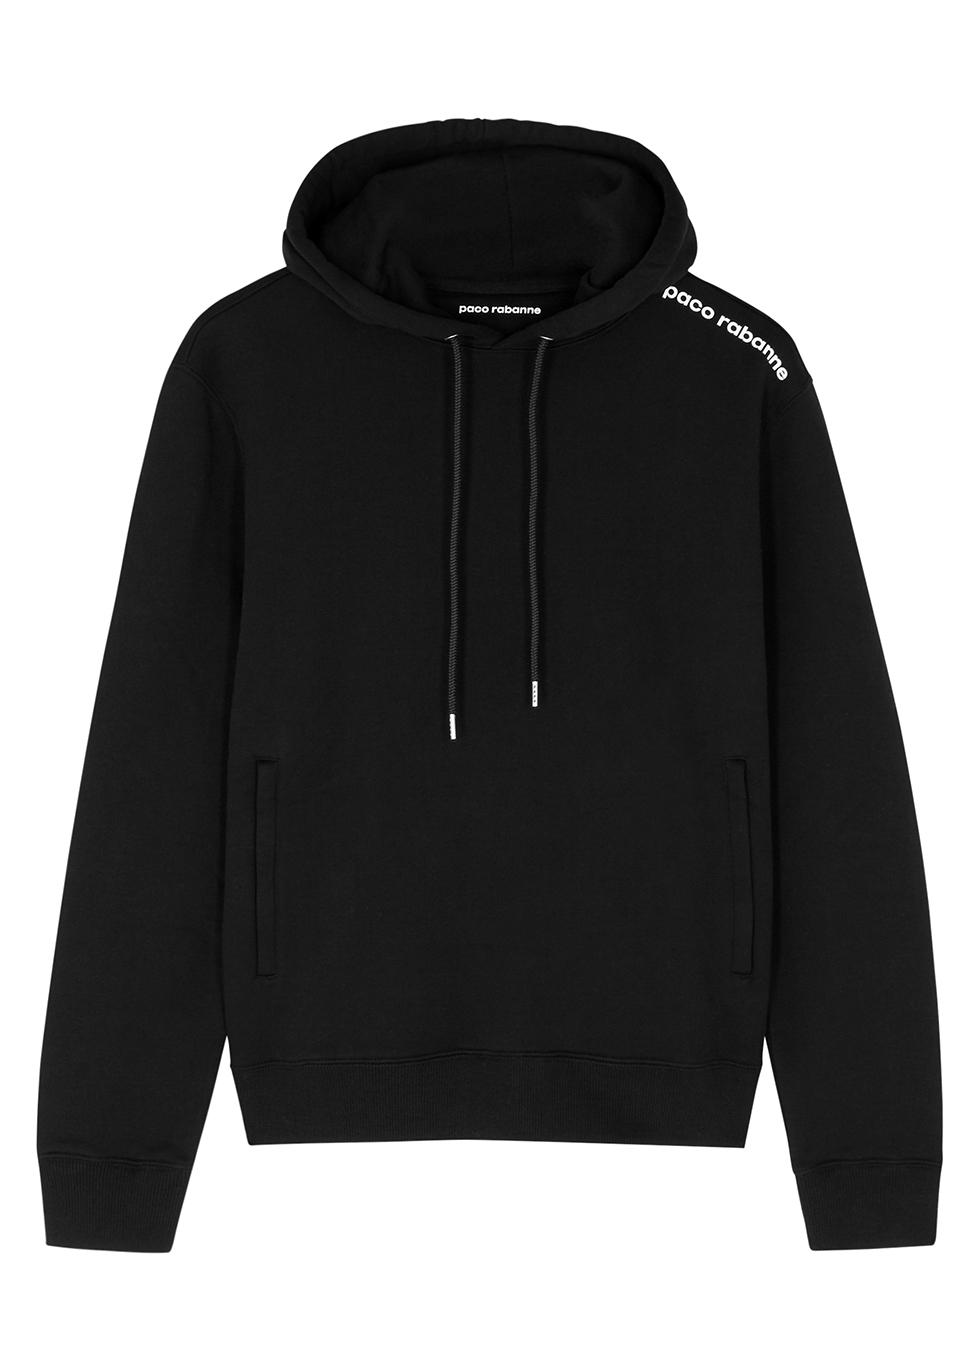 Paco Rabanne Black Logo Hooded Cotton Sweatshirt - Lyst